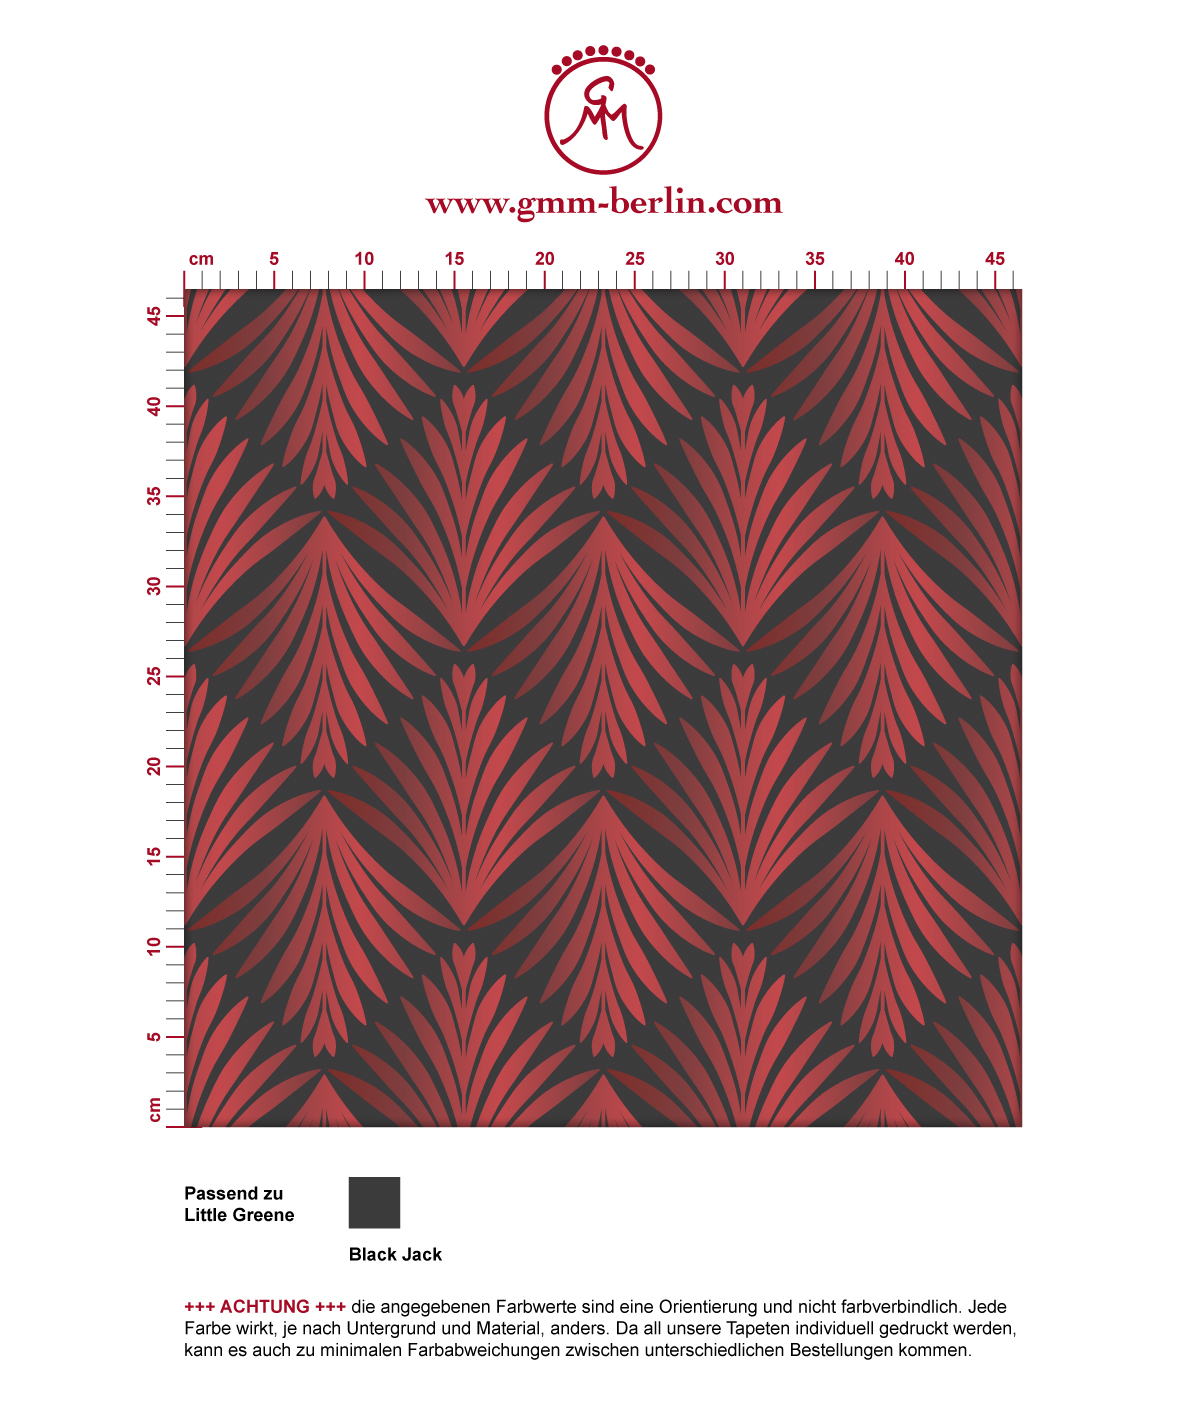 Tapete "Art Deco Akanthus" mit klassischem Blatt Muster in grau rot angepasst an Little Greene Wandfarben. Aus dem GMM-BERLIN.com Sortiment: Schöne Tapeten in der Farbe: rot